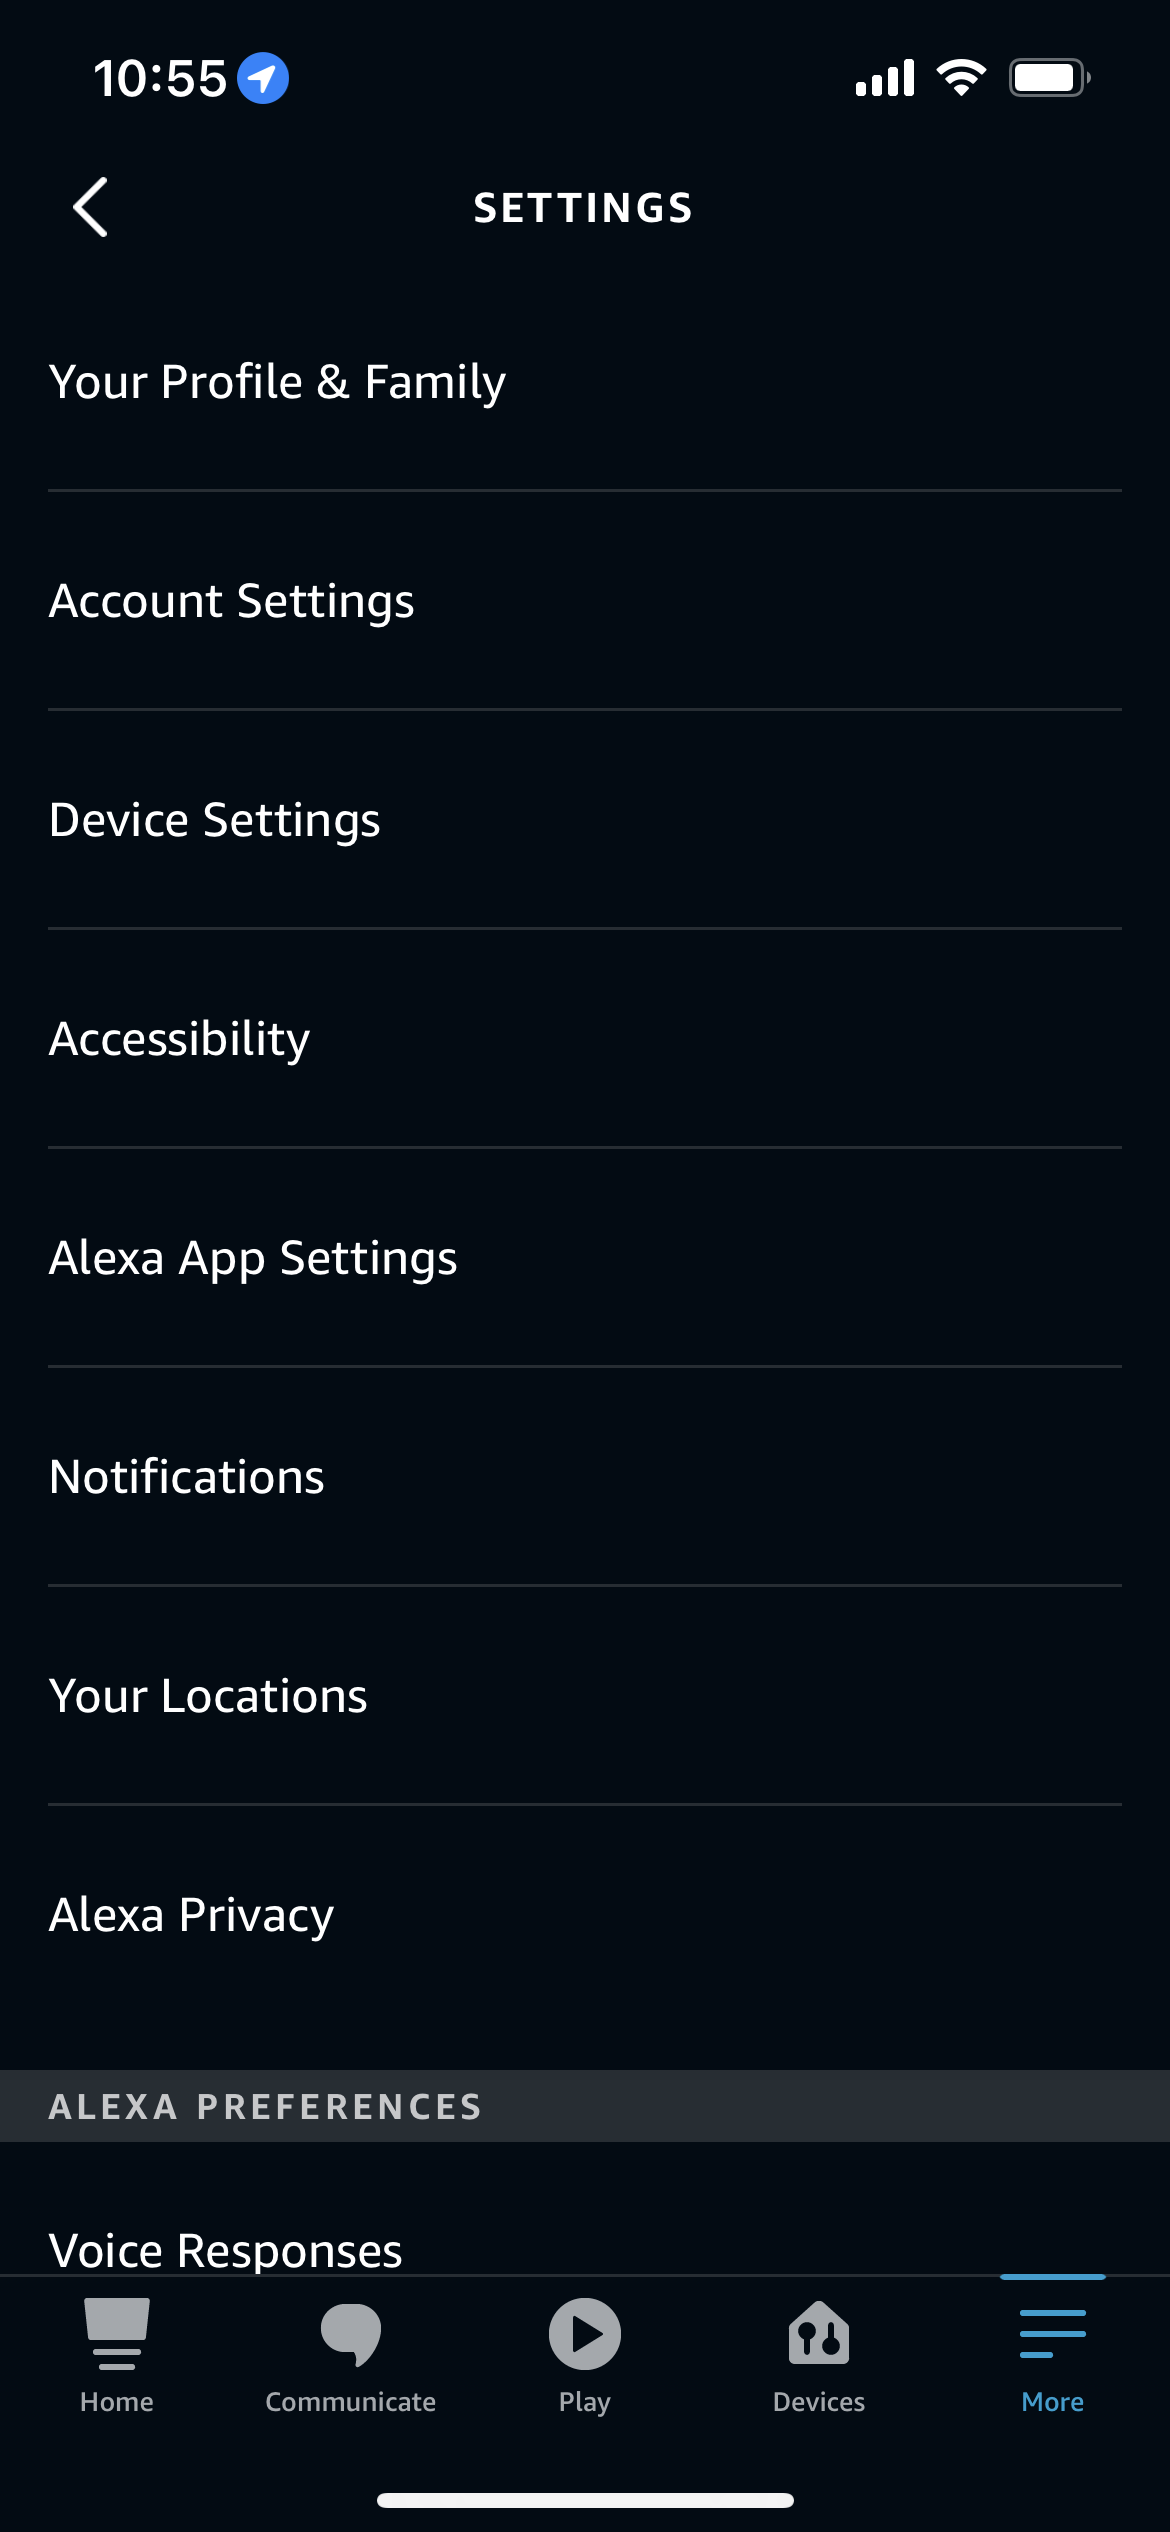 Settings in the Alexa app as of February 2022